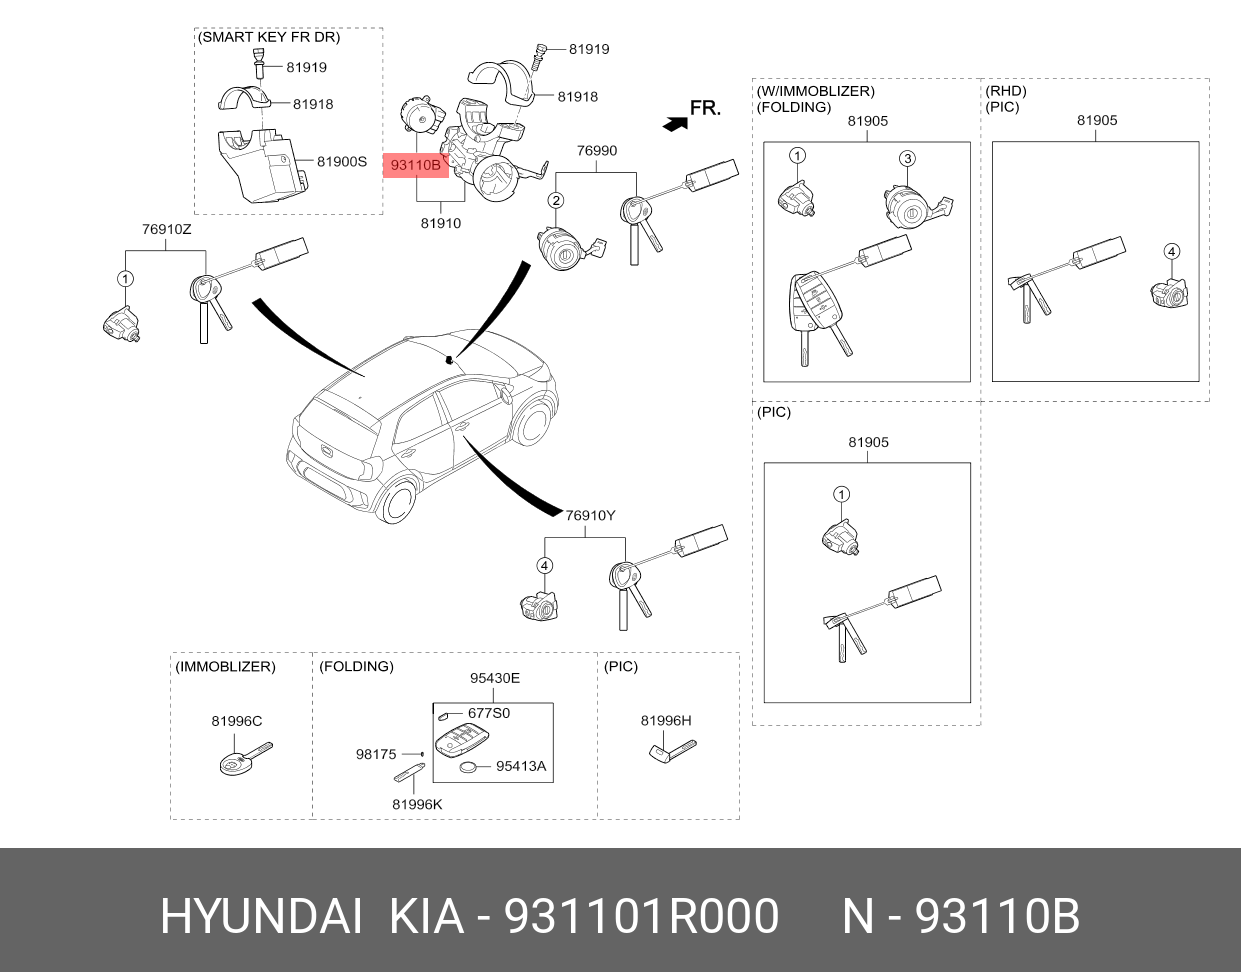 Контактная группа (Hyundai, Kia) 931101r000